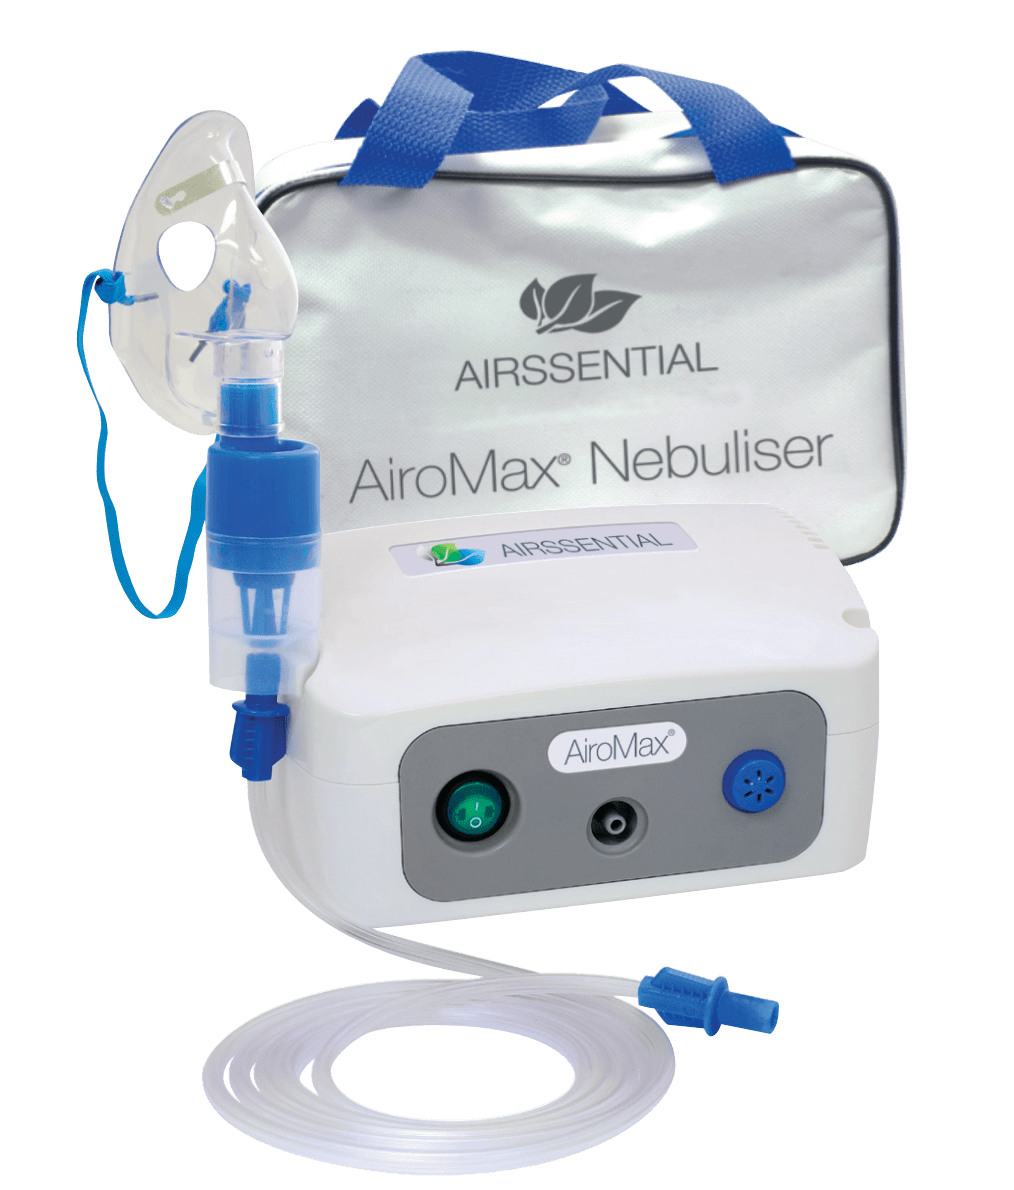 AiroMax Nebuliser - Airssential Health Care